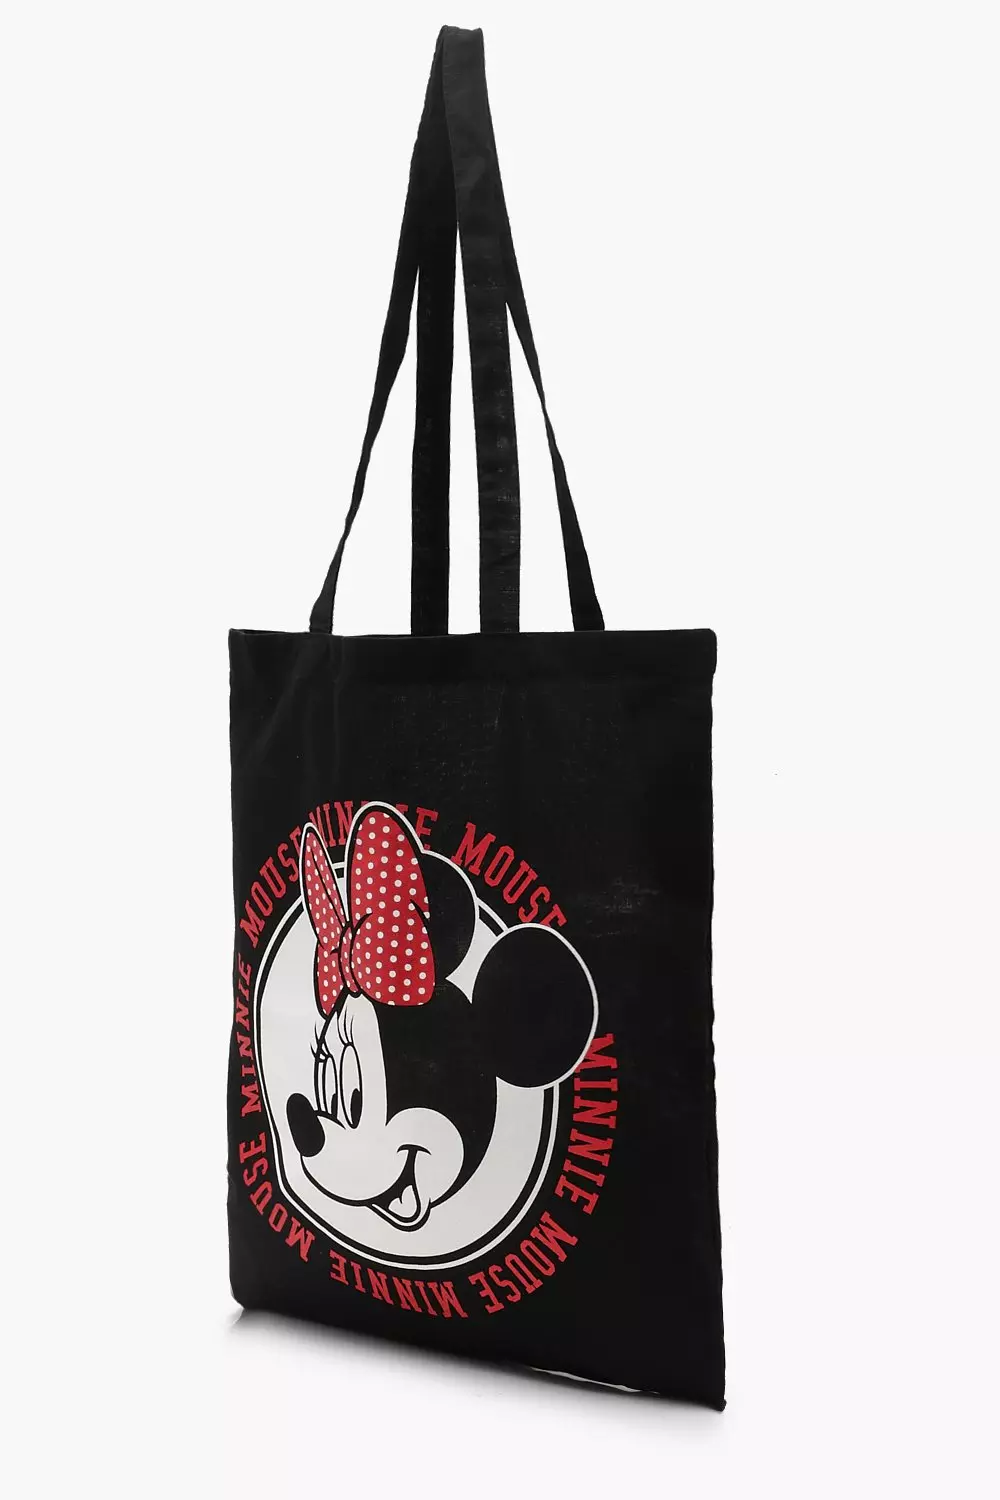 Minnie Mouse Tasche / Shopper